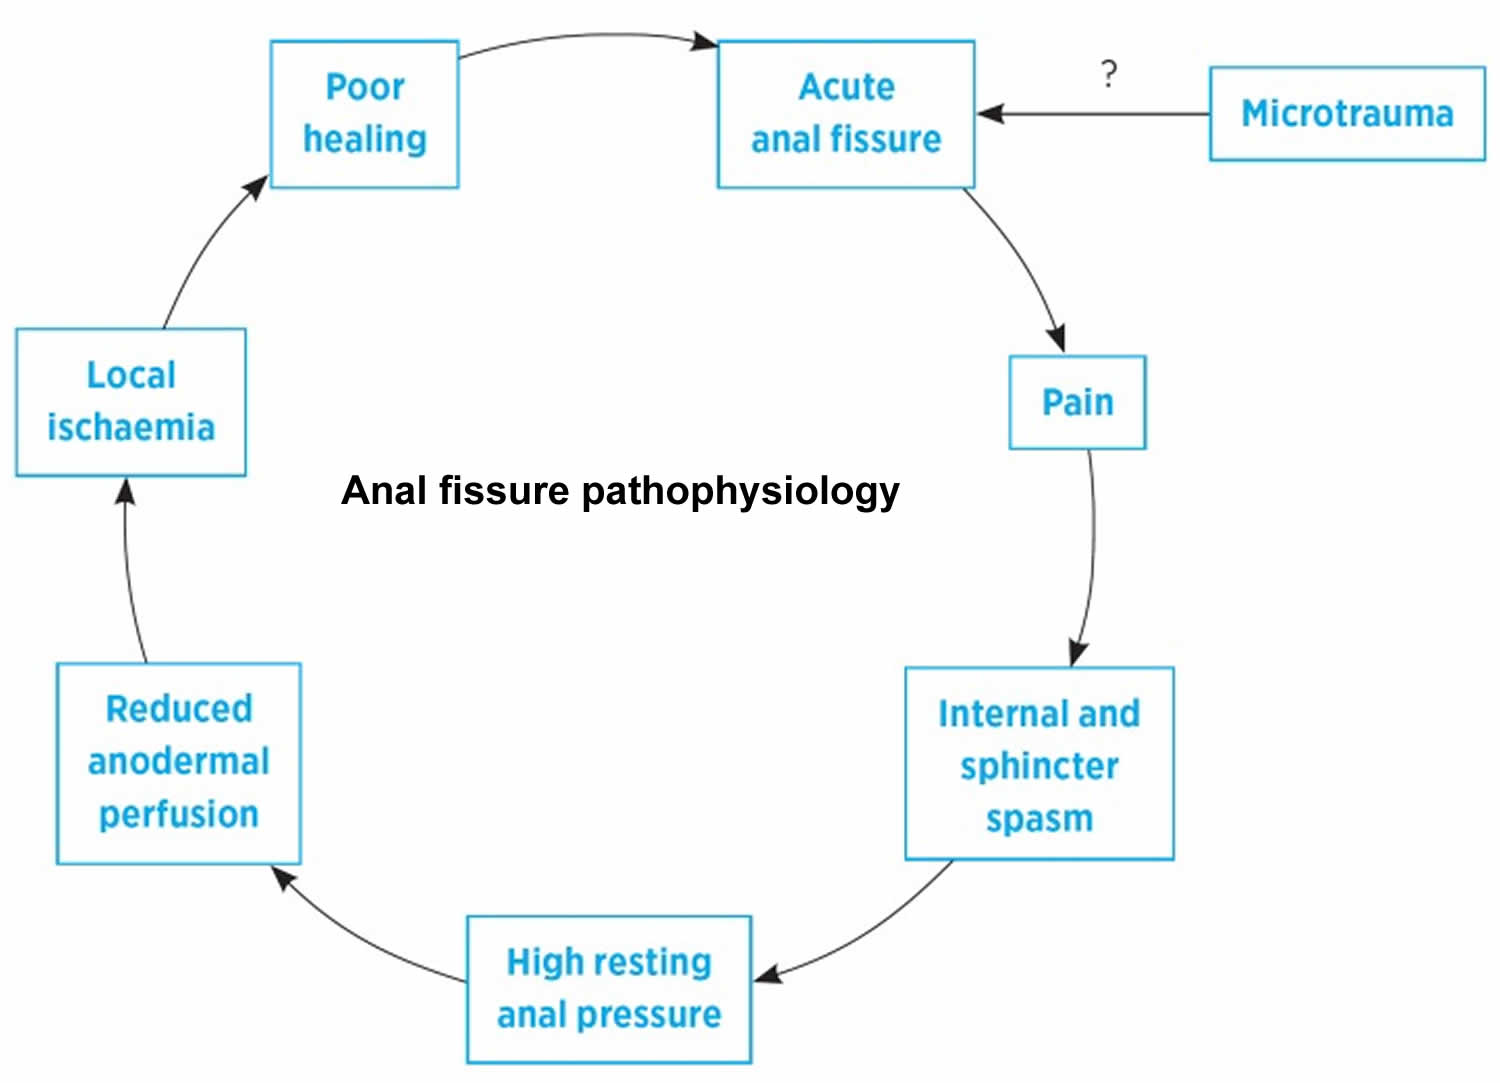 Anal fissure pathophysiology